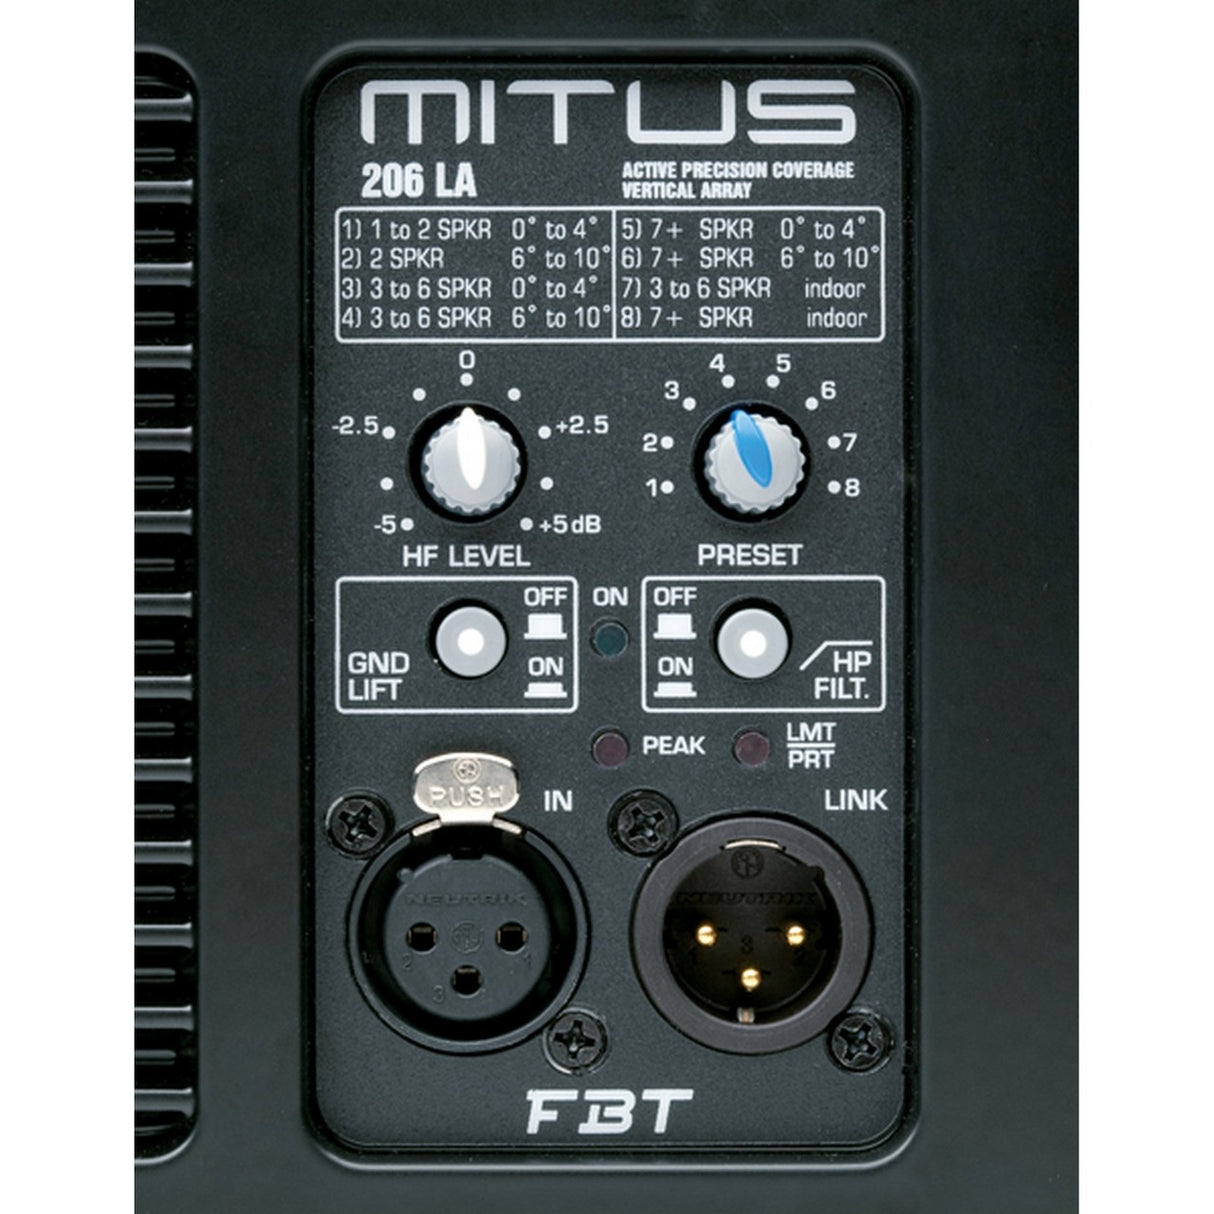 FBT MITUS 206 LA | 900W Compact 2 Way Active Precision Vertical Array Speaker